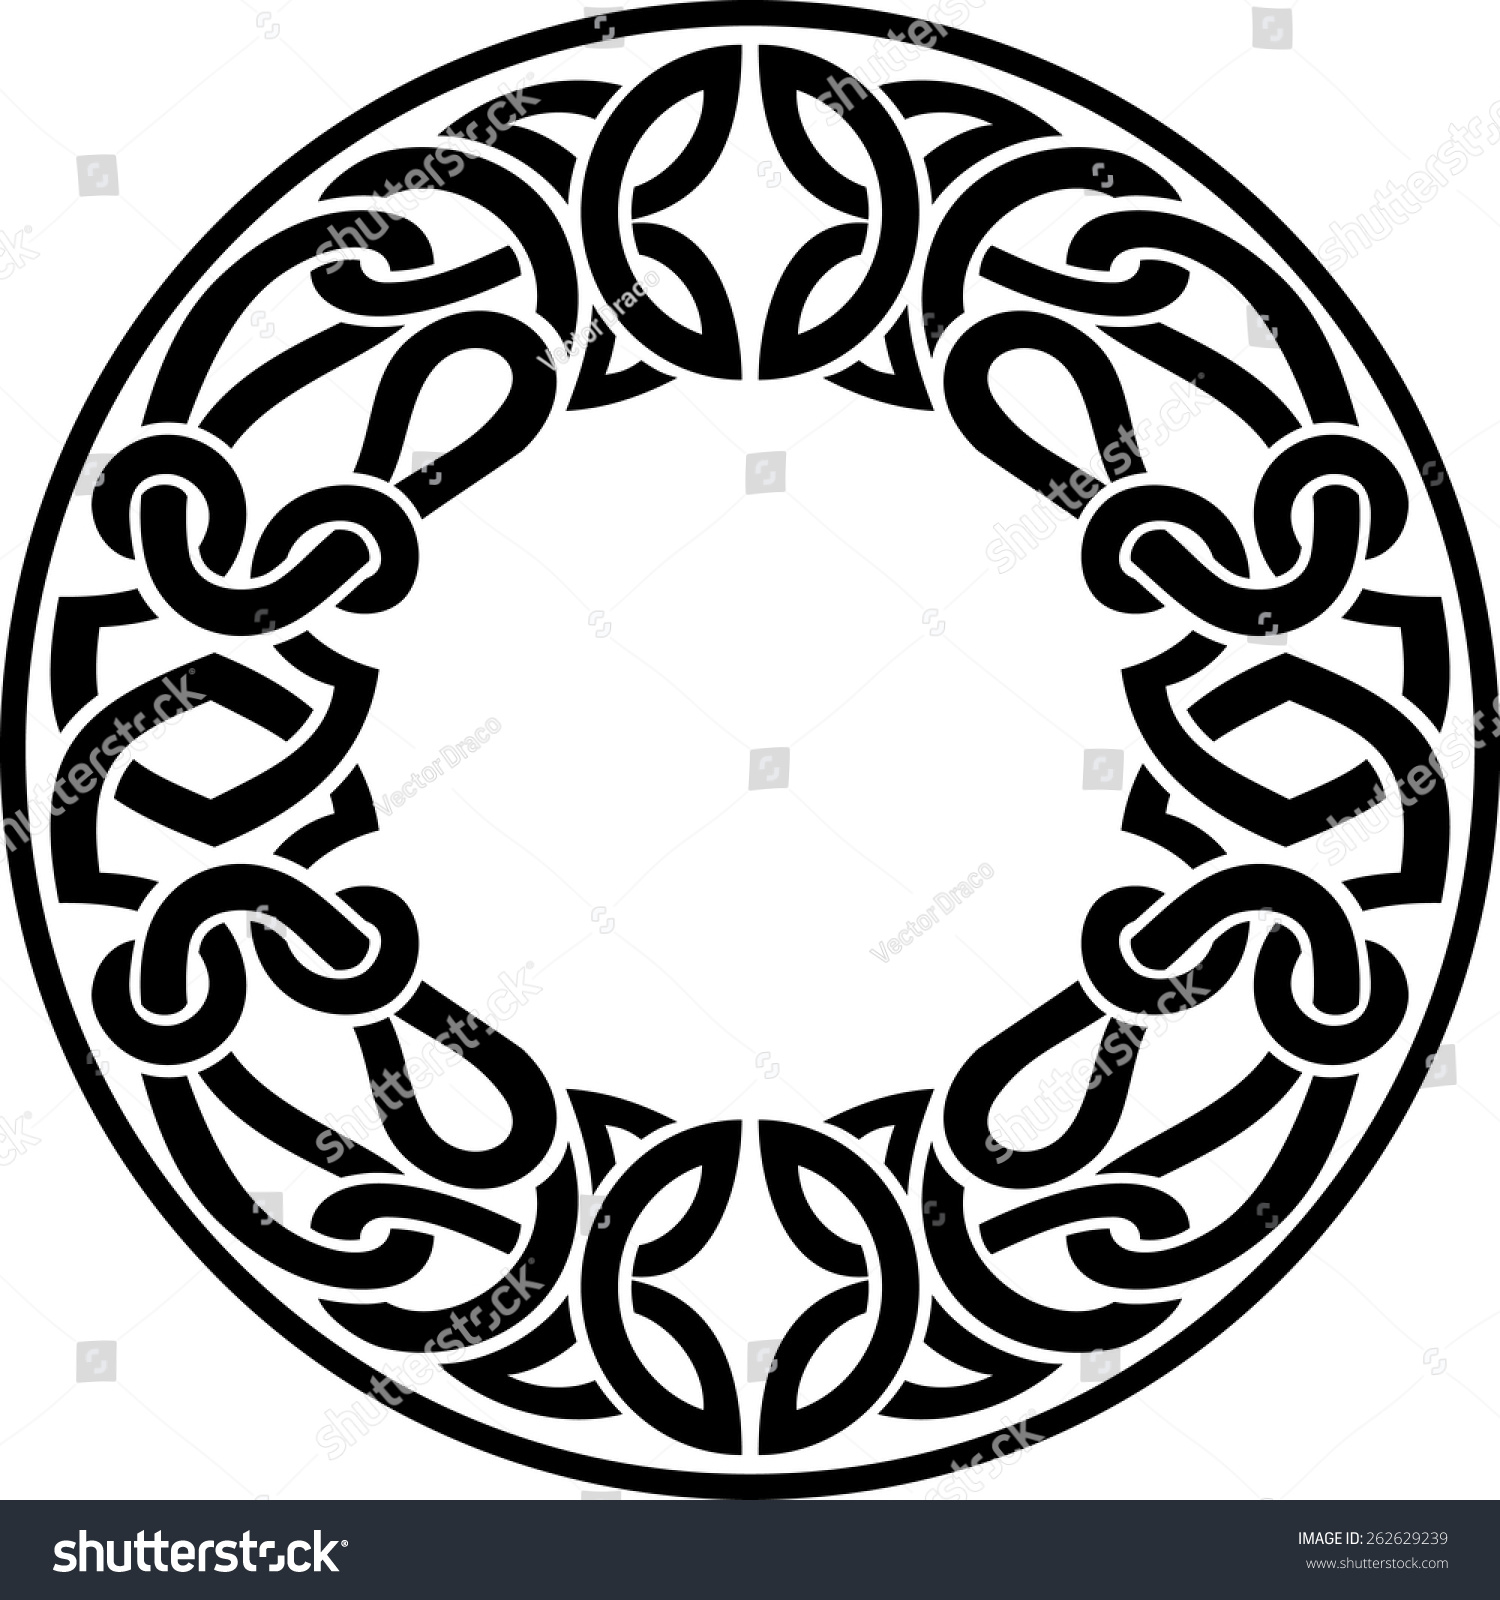 Blank Round Ornamental Celtic Design Stock Vector 262629239 : Shutterstock